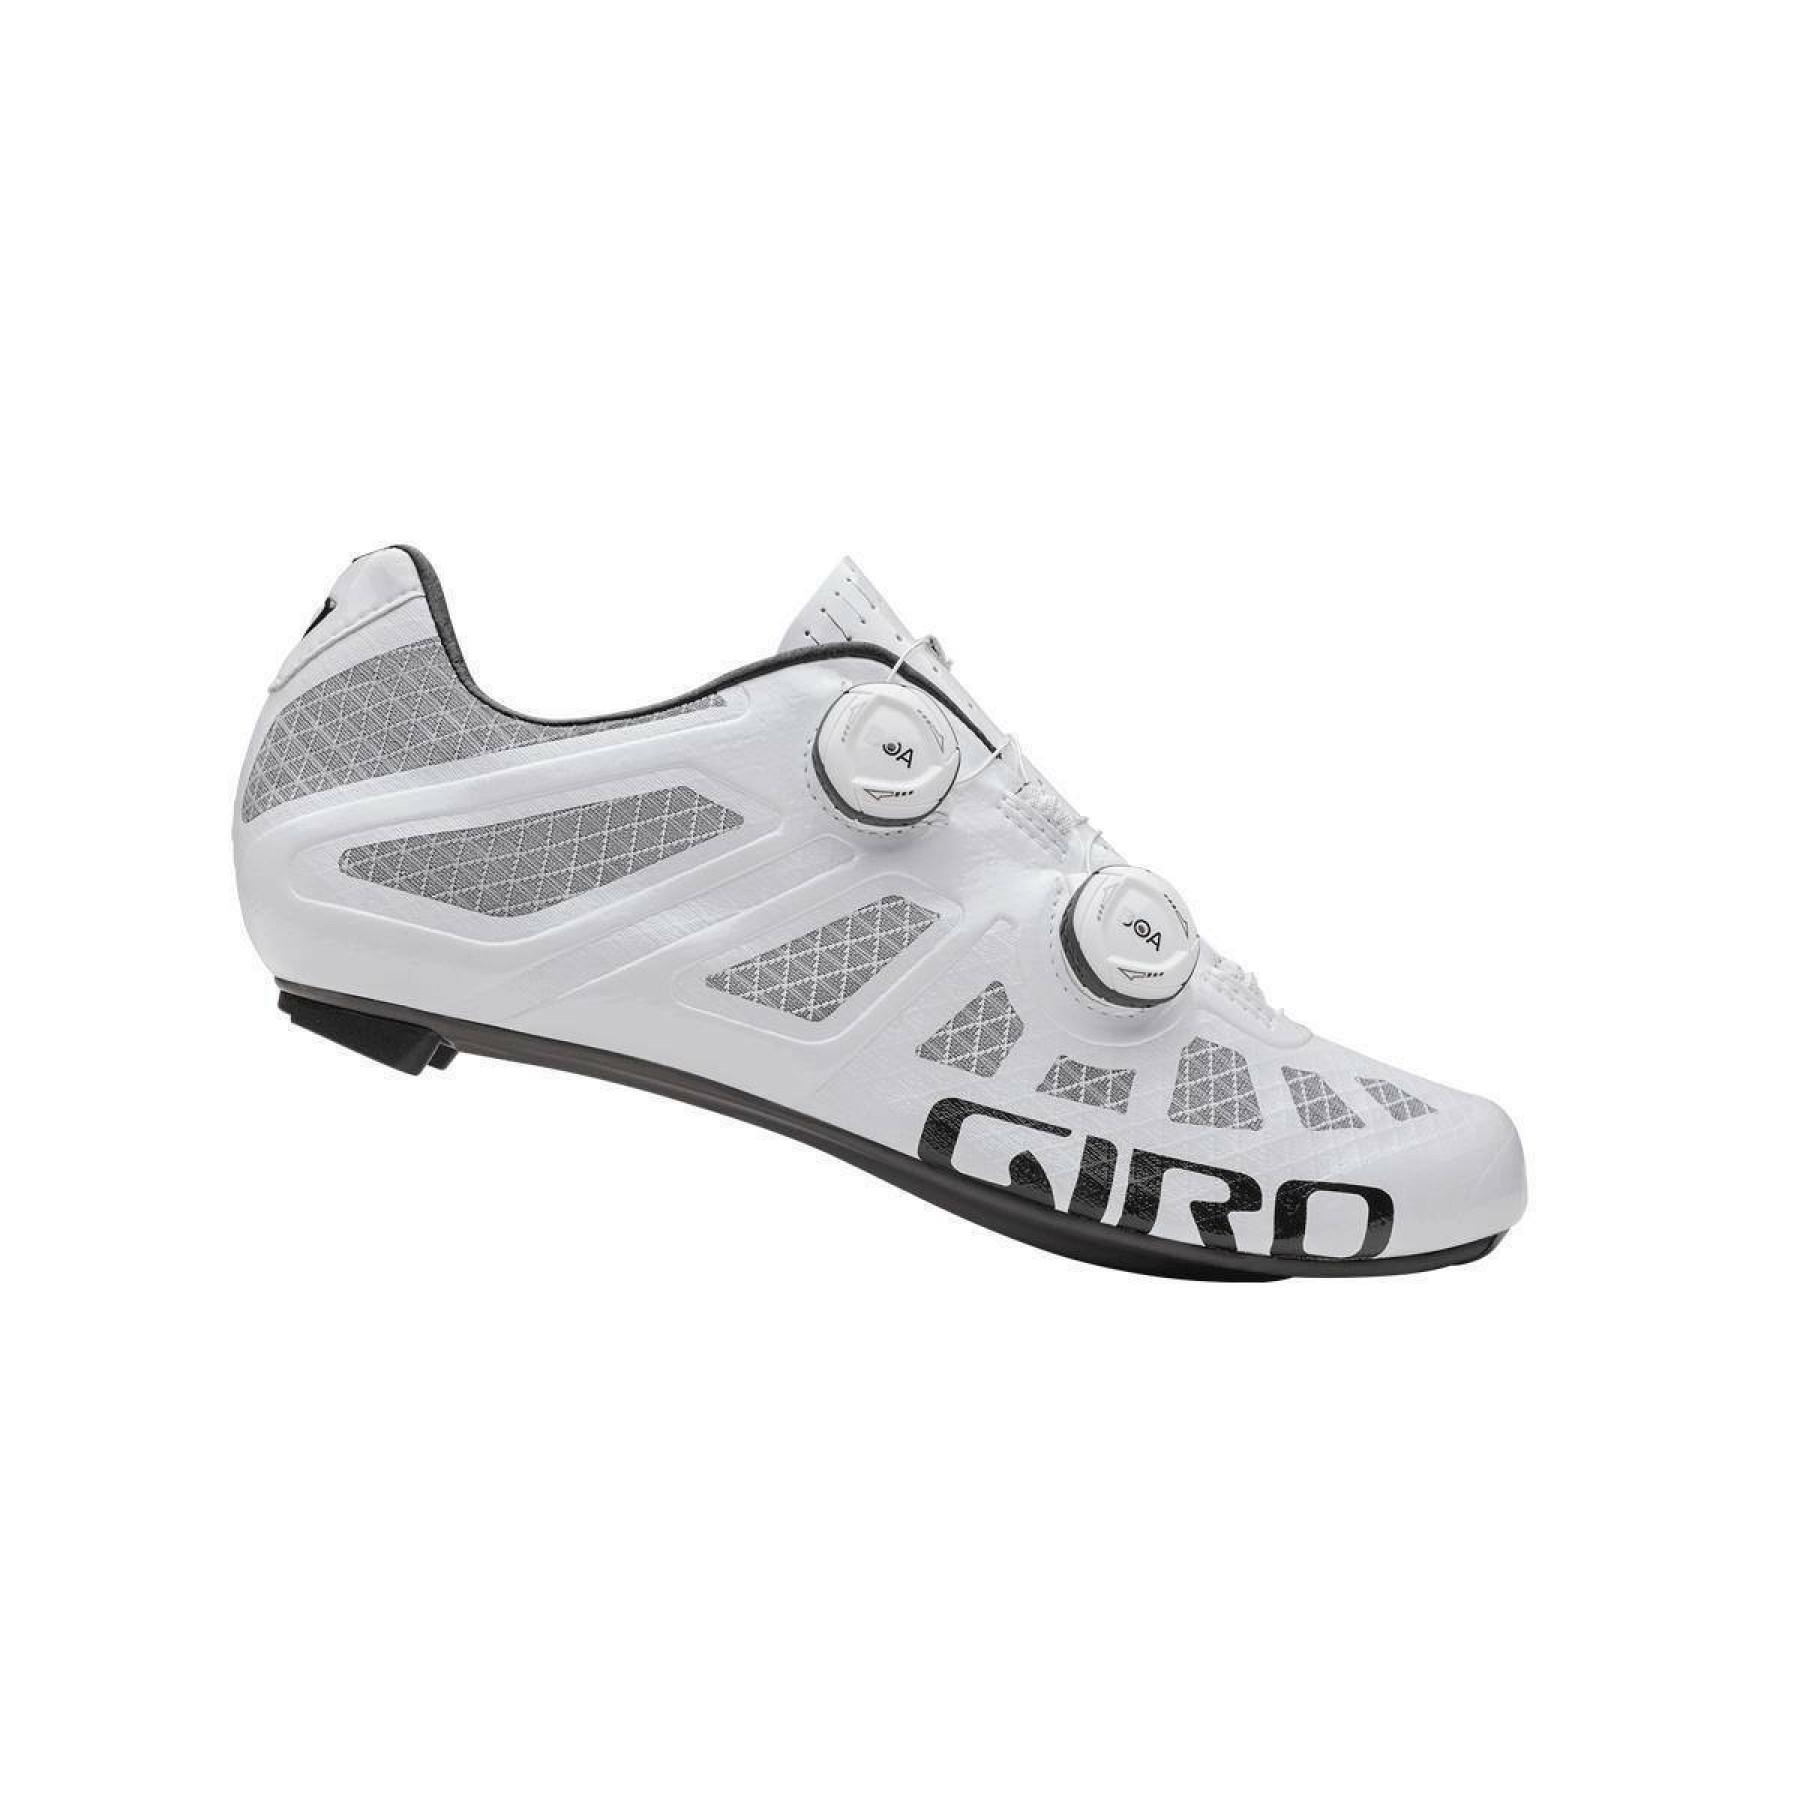 Schuhe Giro Imperial